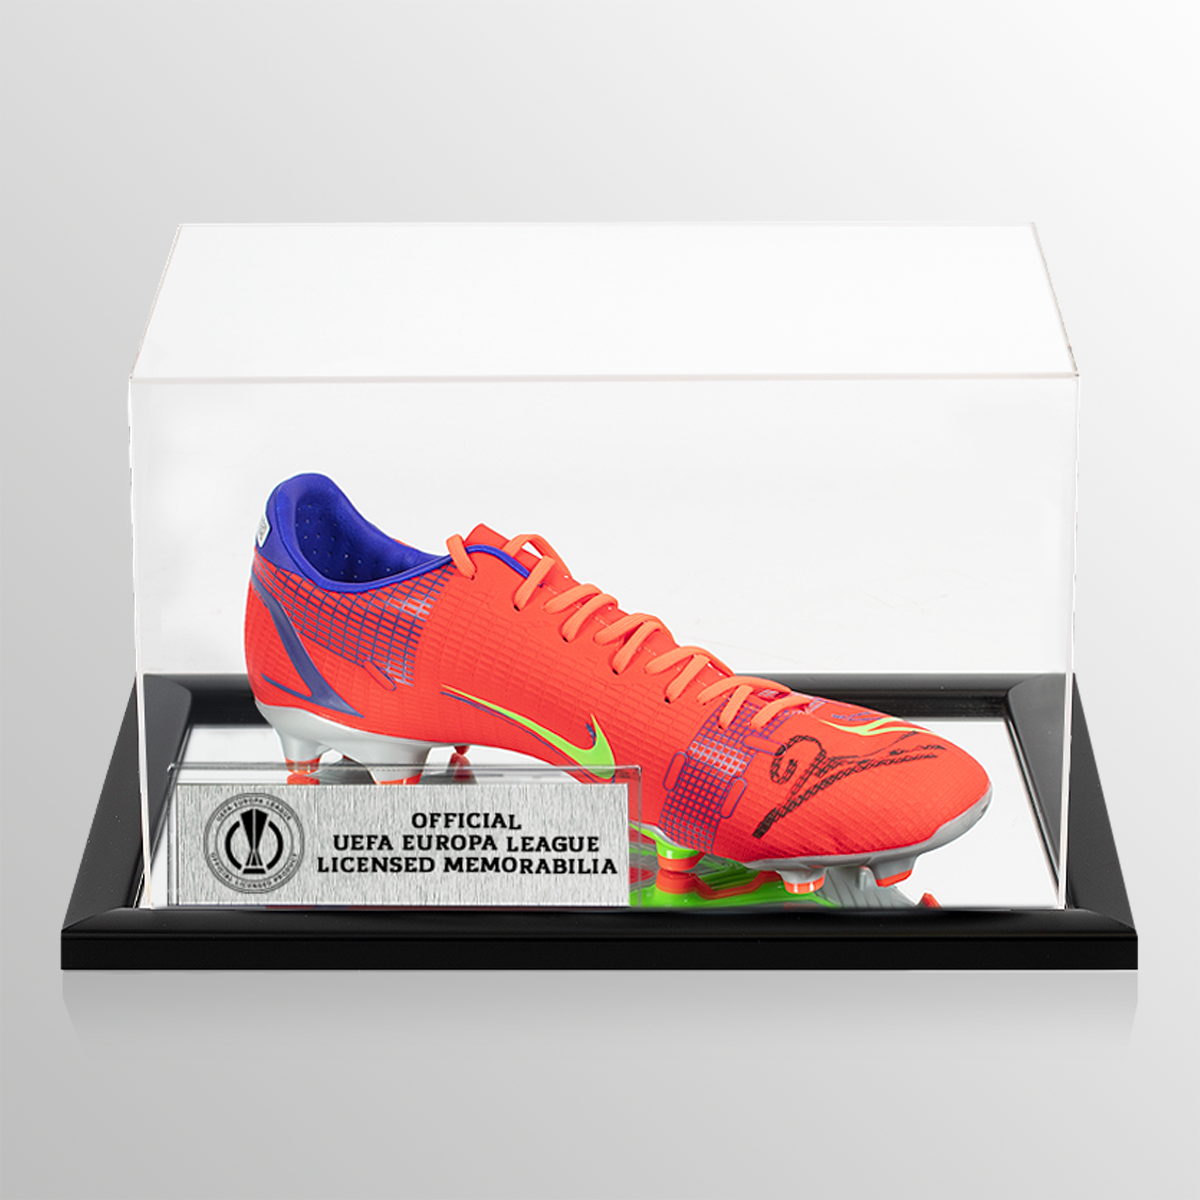 Robert Lewandowski Offizieller signierter roter Nike Mercurial-Schuh der UEFA Europa League in Acrylhülle